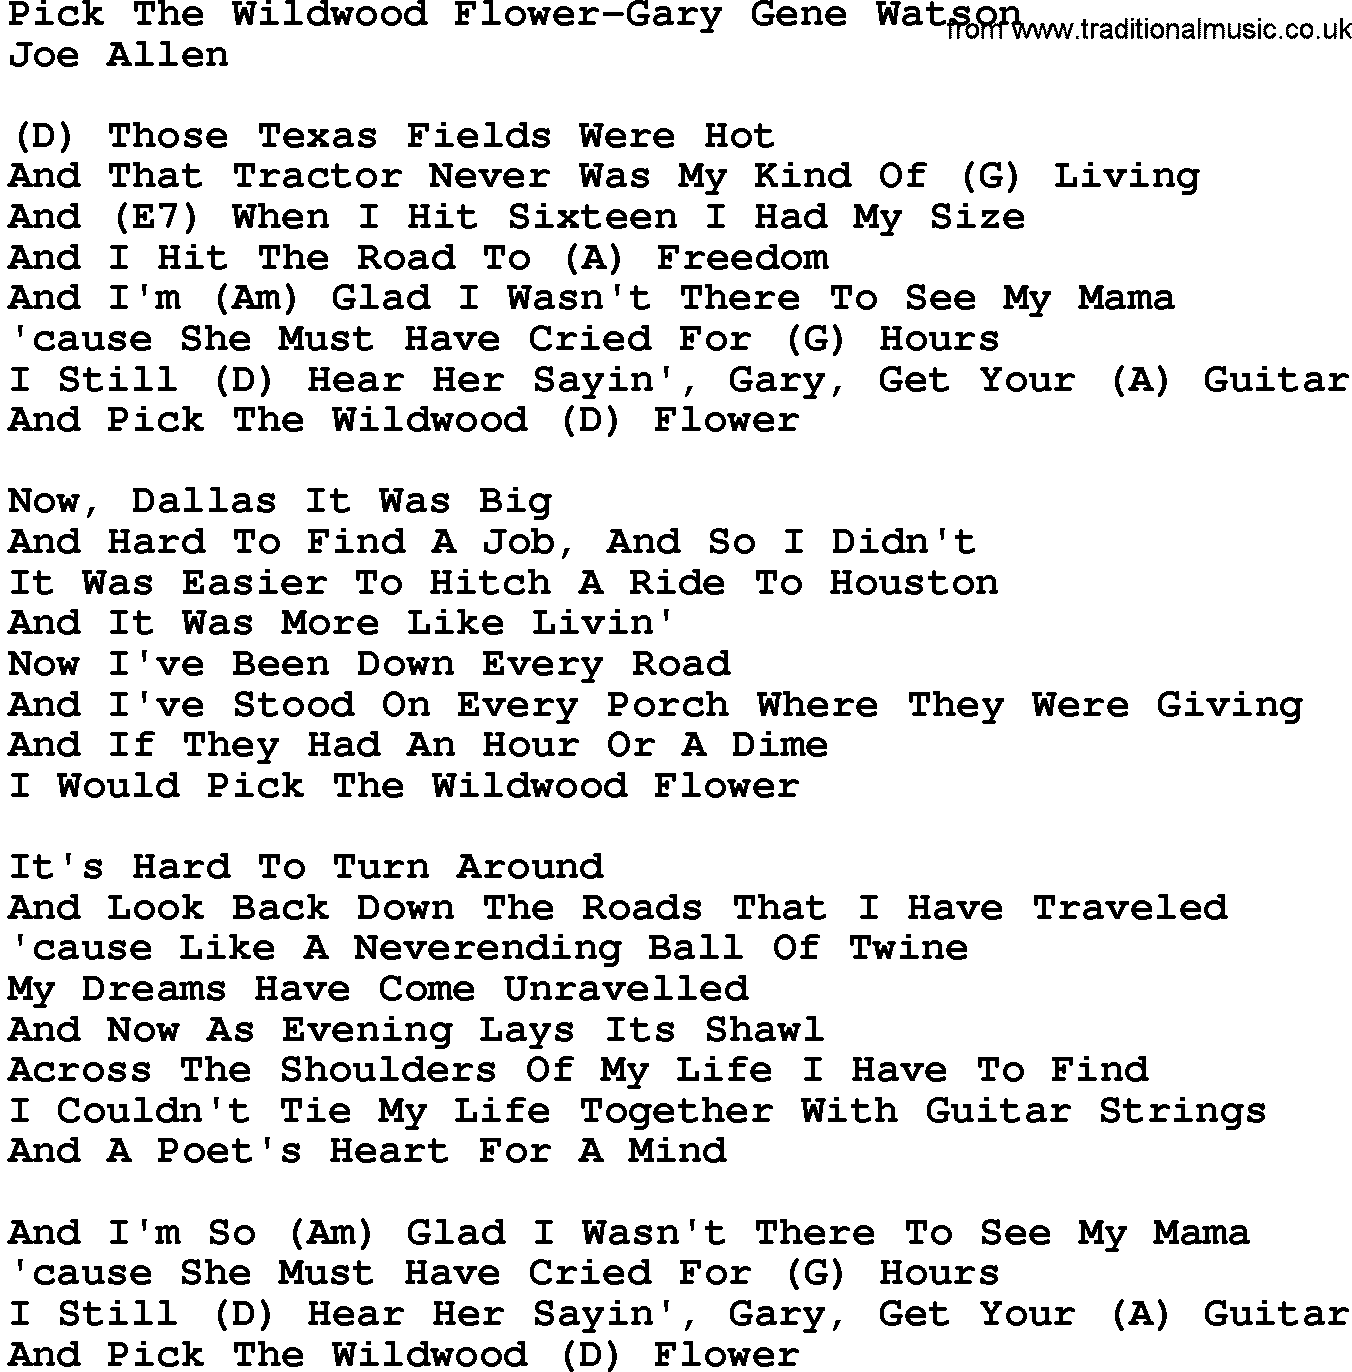 Country music song: Pick The Wildwood Flower-Gary Gene Watson lyrics and chords